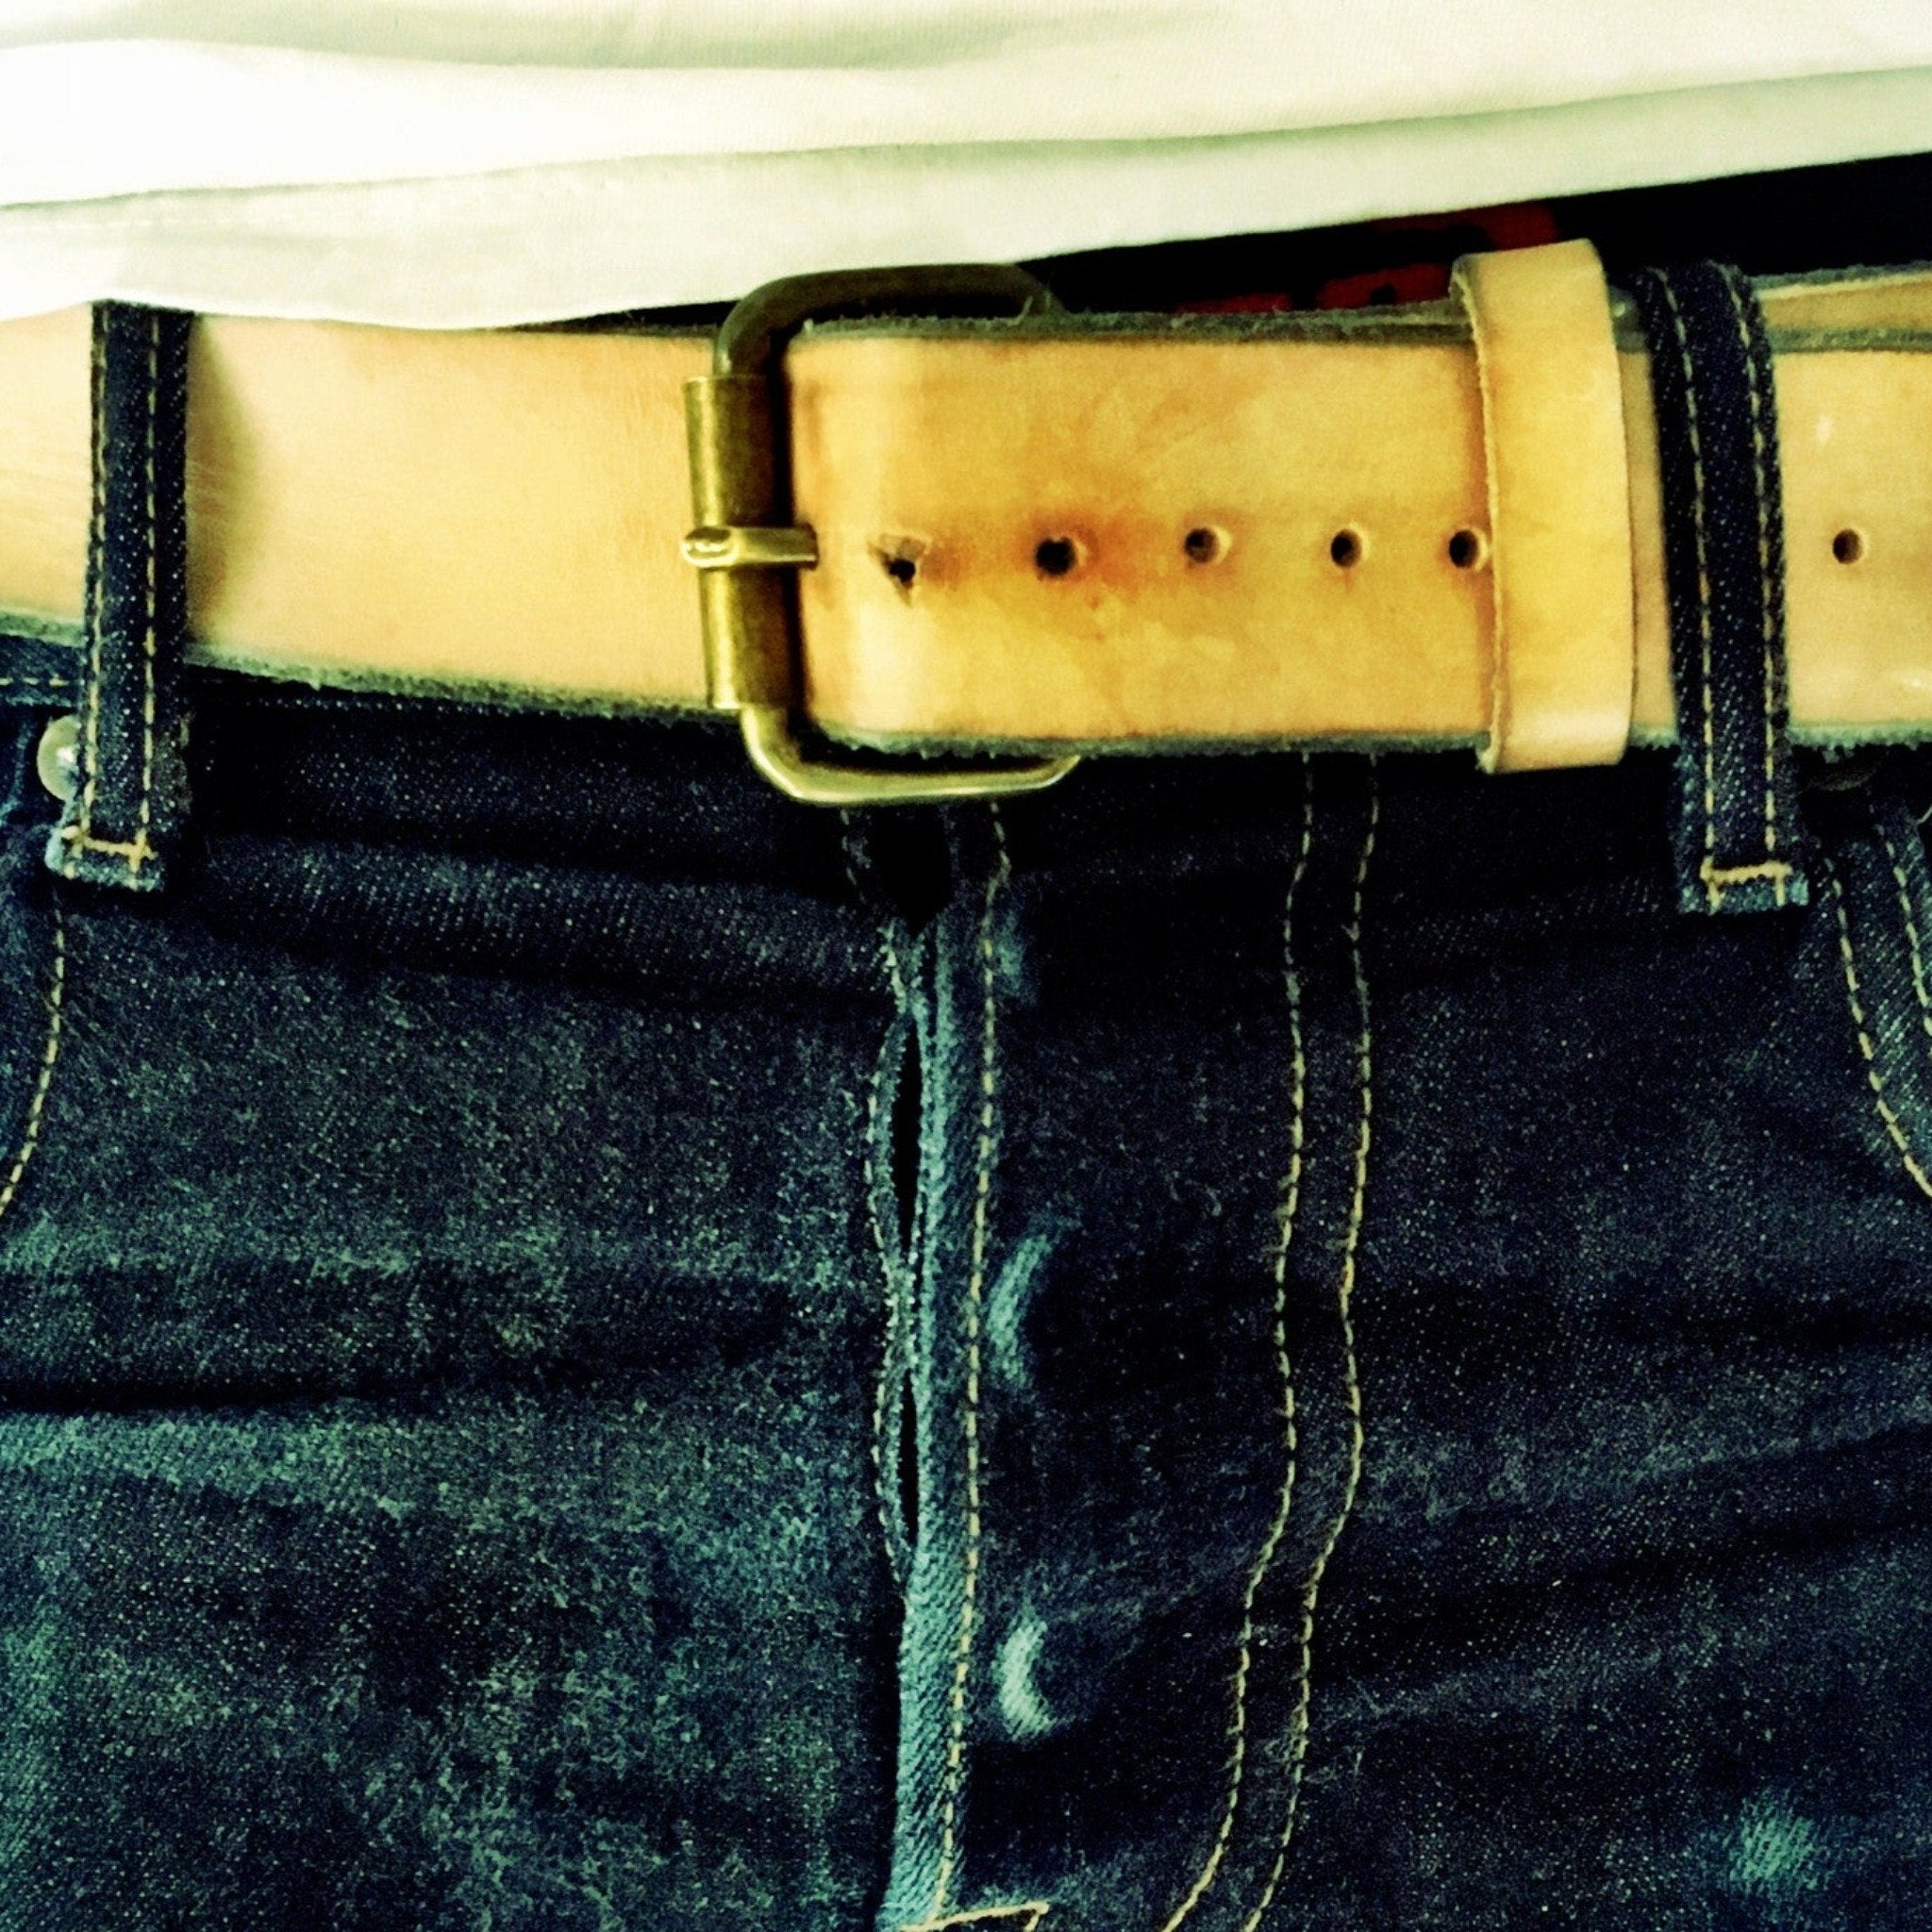 jeans belt